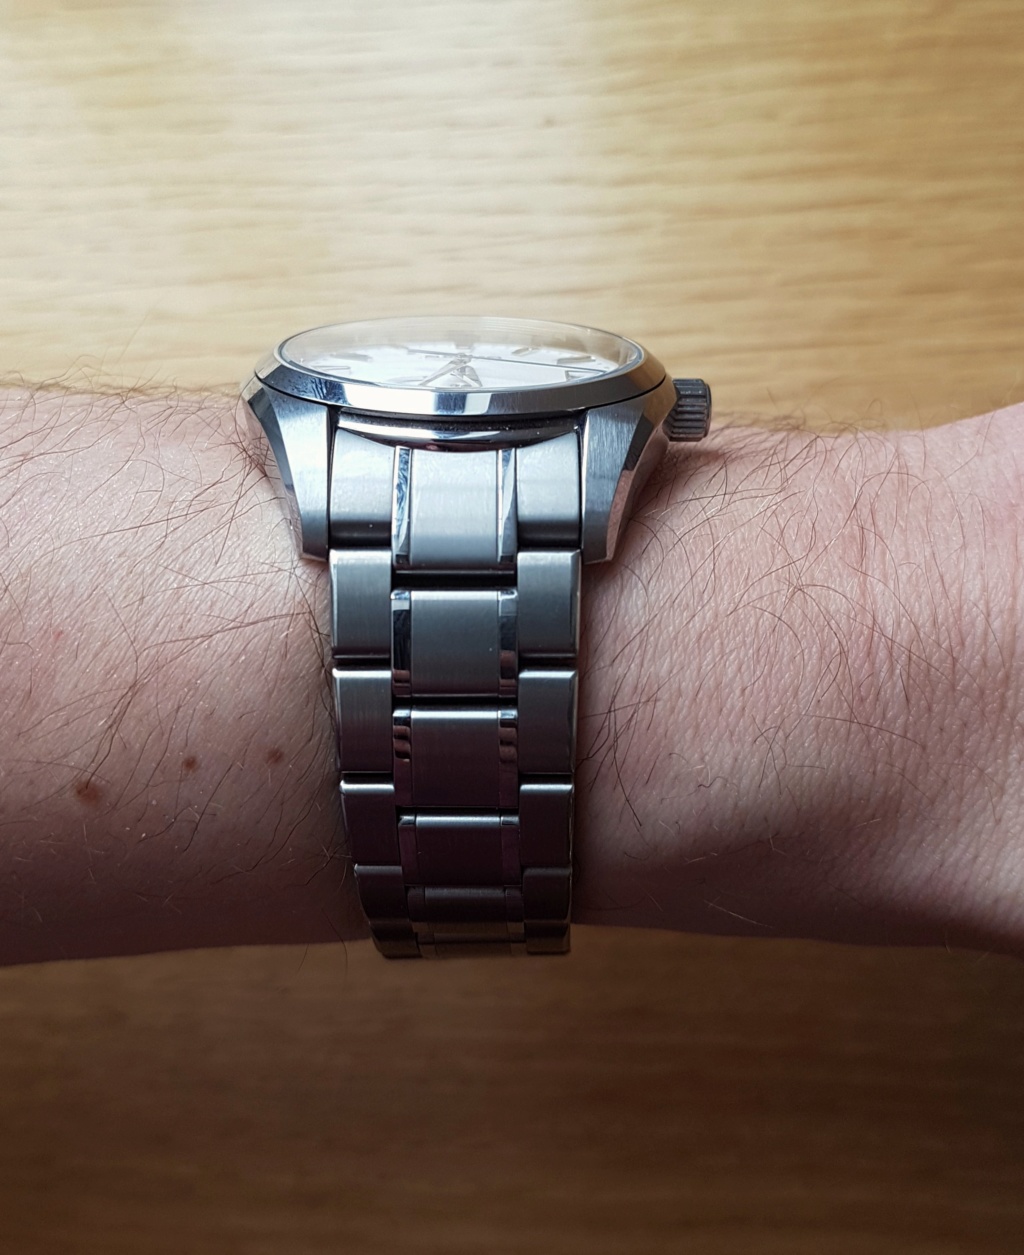 Comparaison de deux montres polyvalentes Grand Seiko SBGA011 vs BB58 33631010